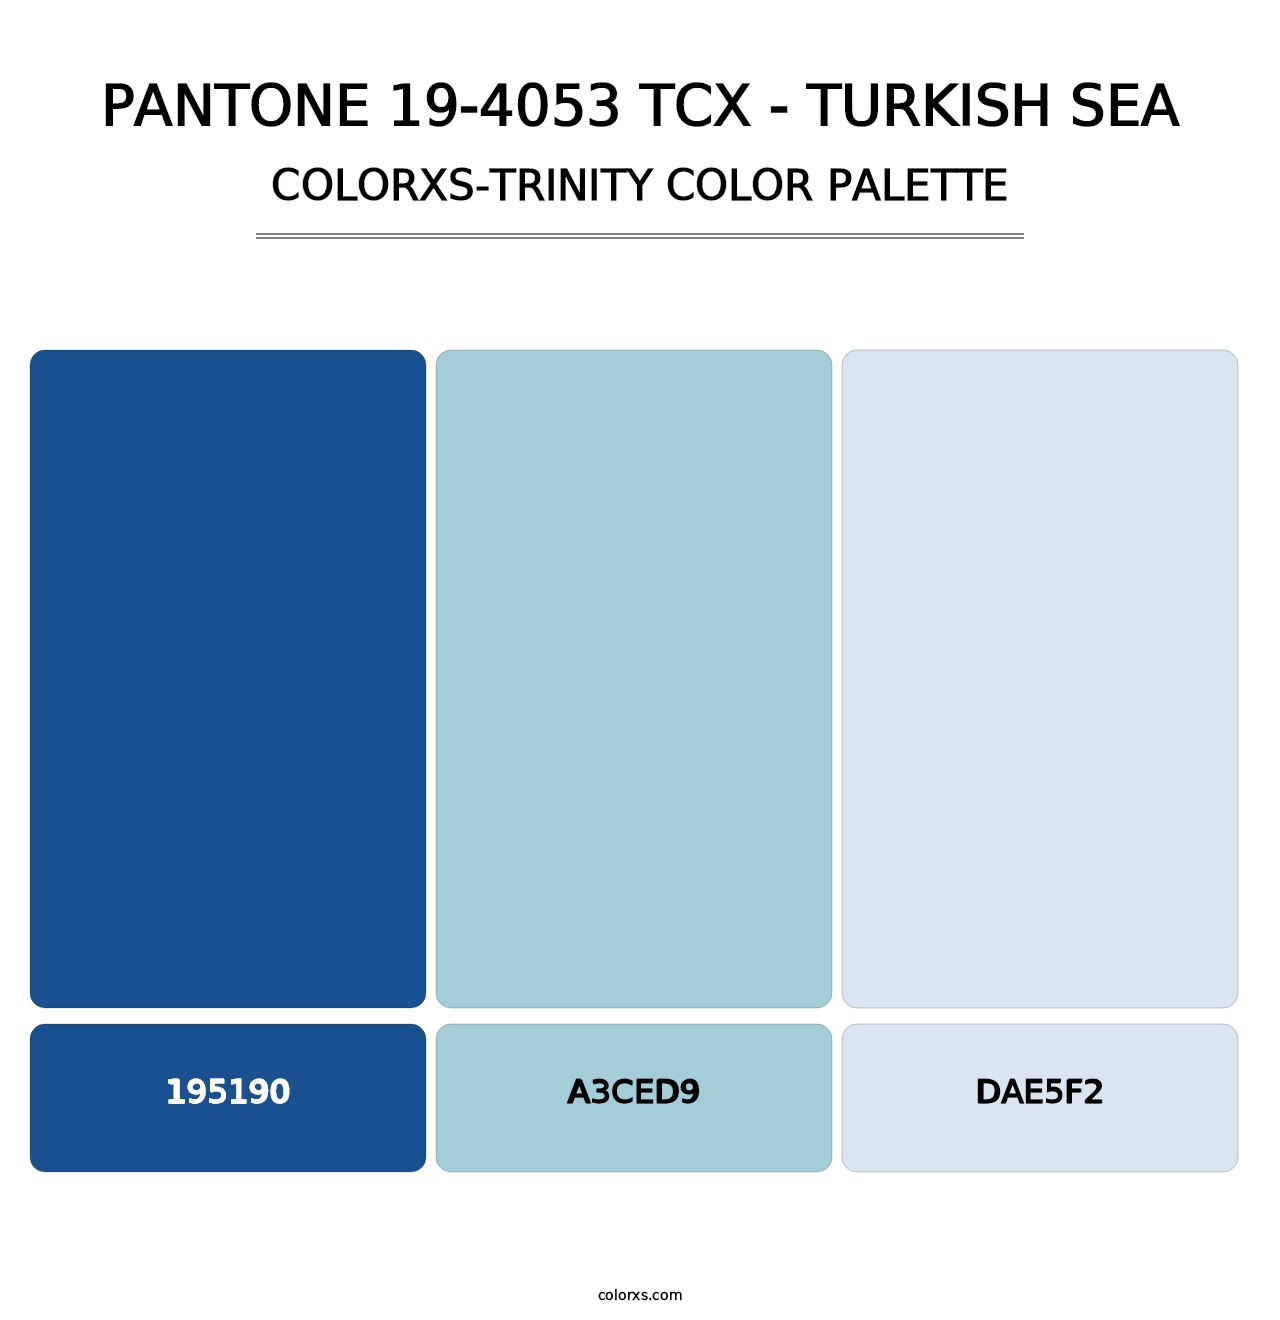 PANTONE 19-4053 TCX - Turkish Sea - Colorxs Trinity Palette